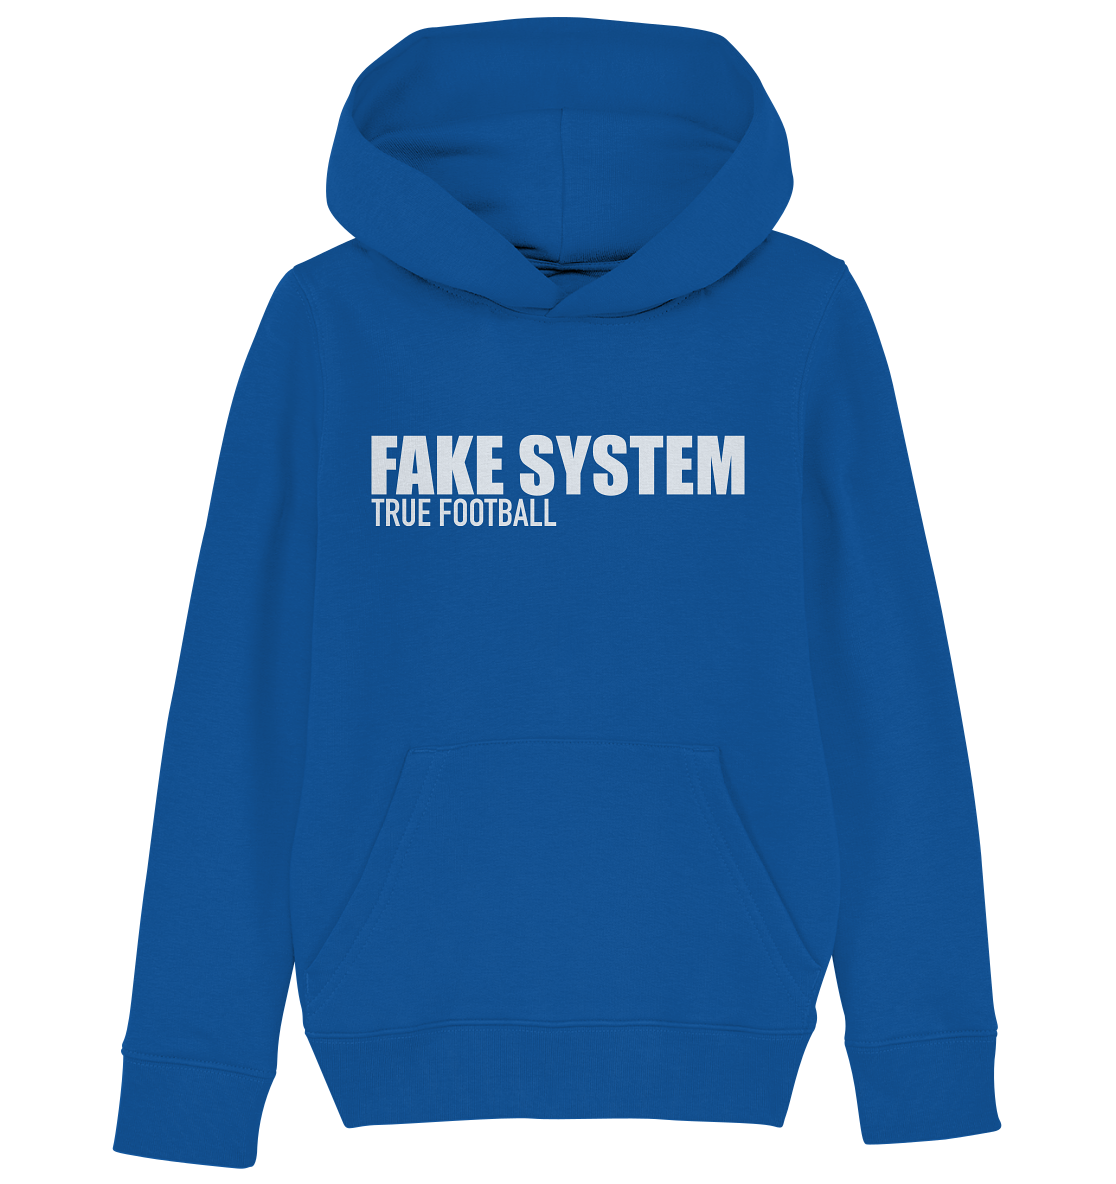 BLOCK.FC Hoodie "FAKE SYSTEM TRUE FOOTBALL" Männer Organic Fashion Kapuzenpullover blau